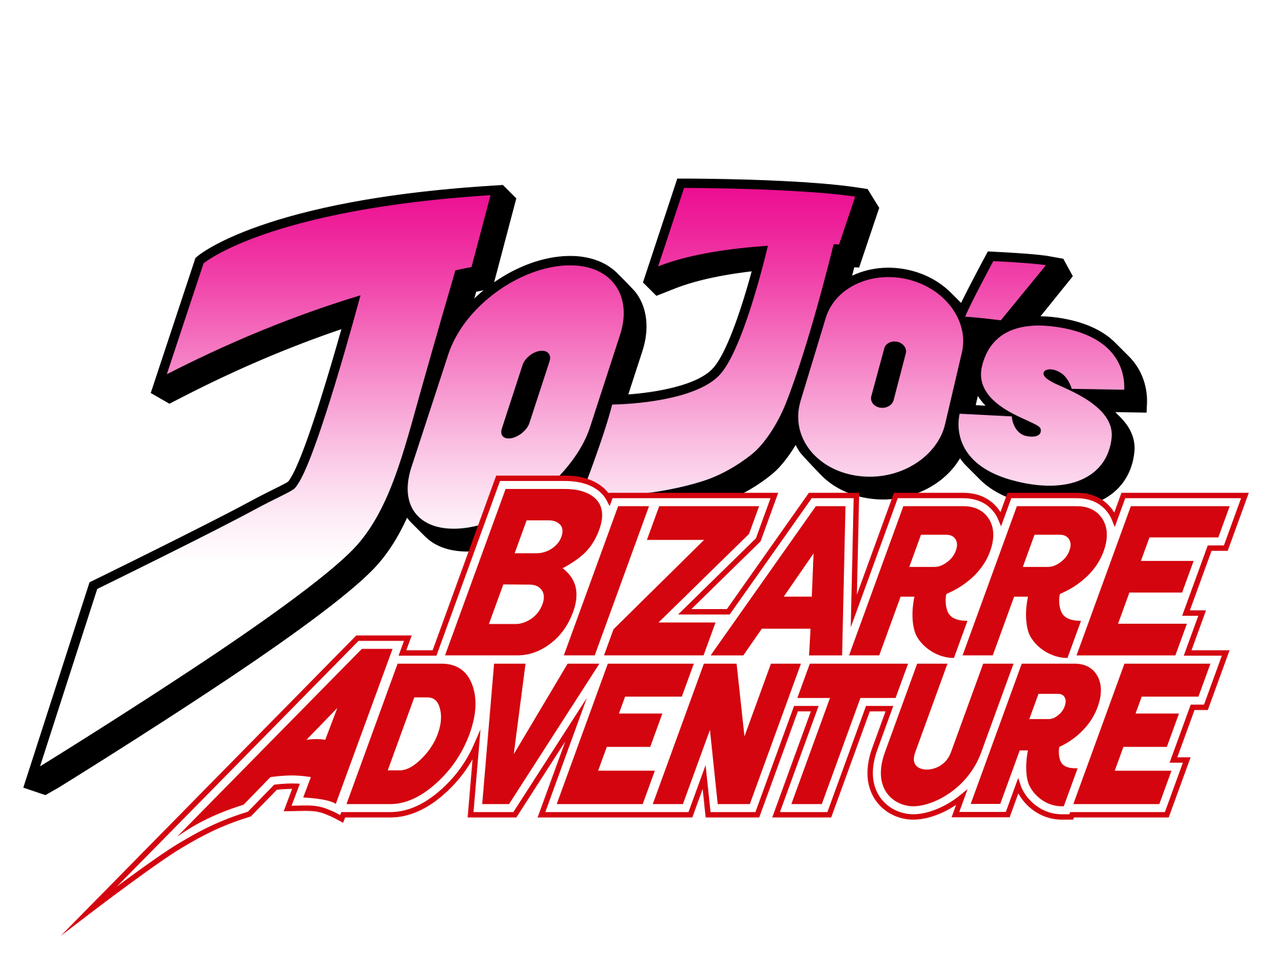 _logo__jojo_s_bizarre_adventure_logo_recreation_by_rapbattleeditor0510_ddrmyz1-fullview.png